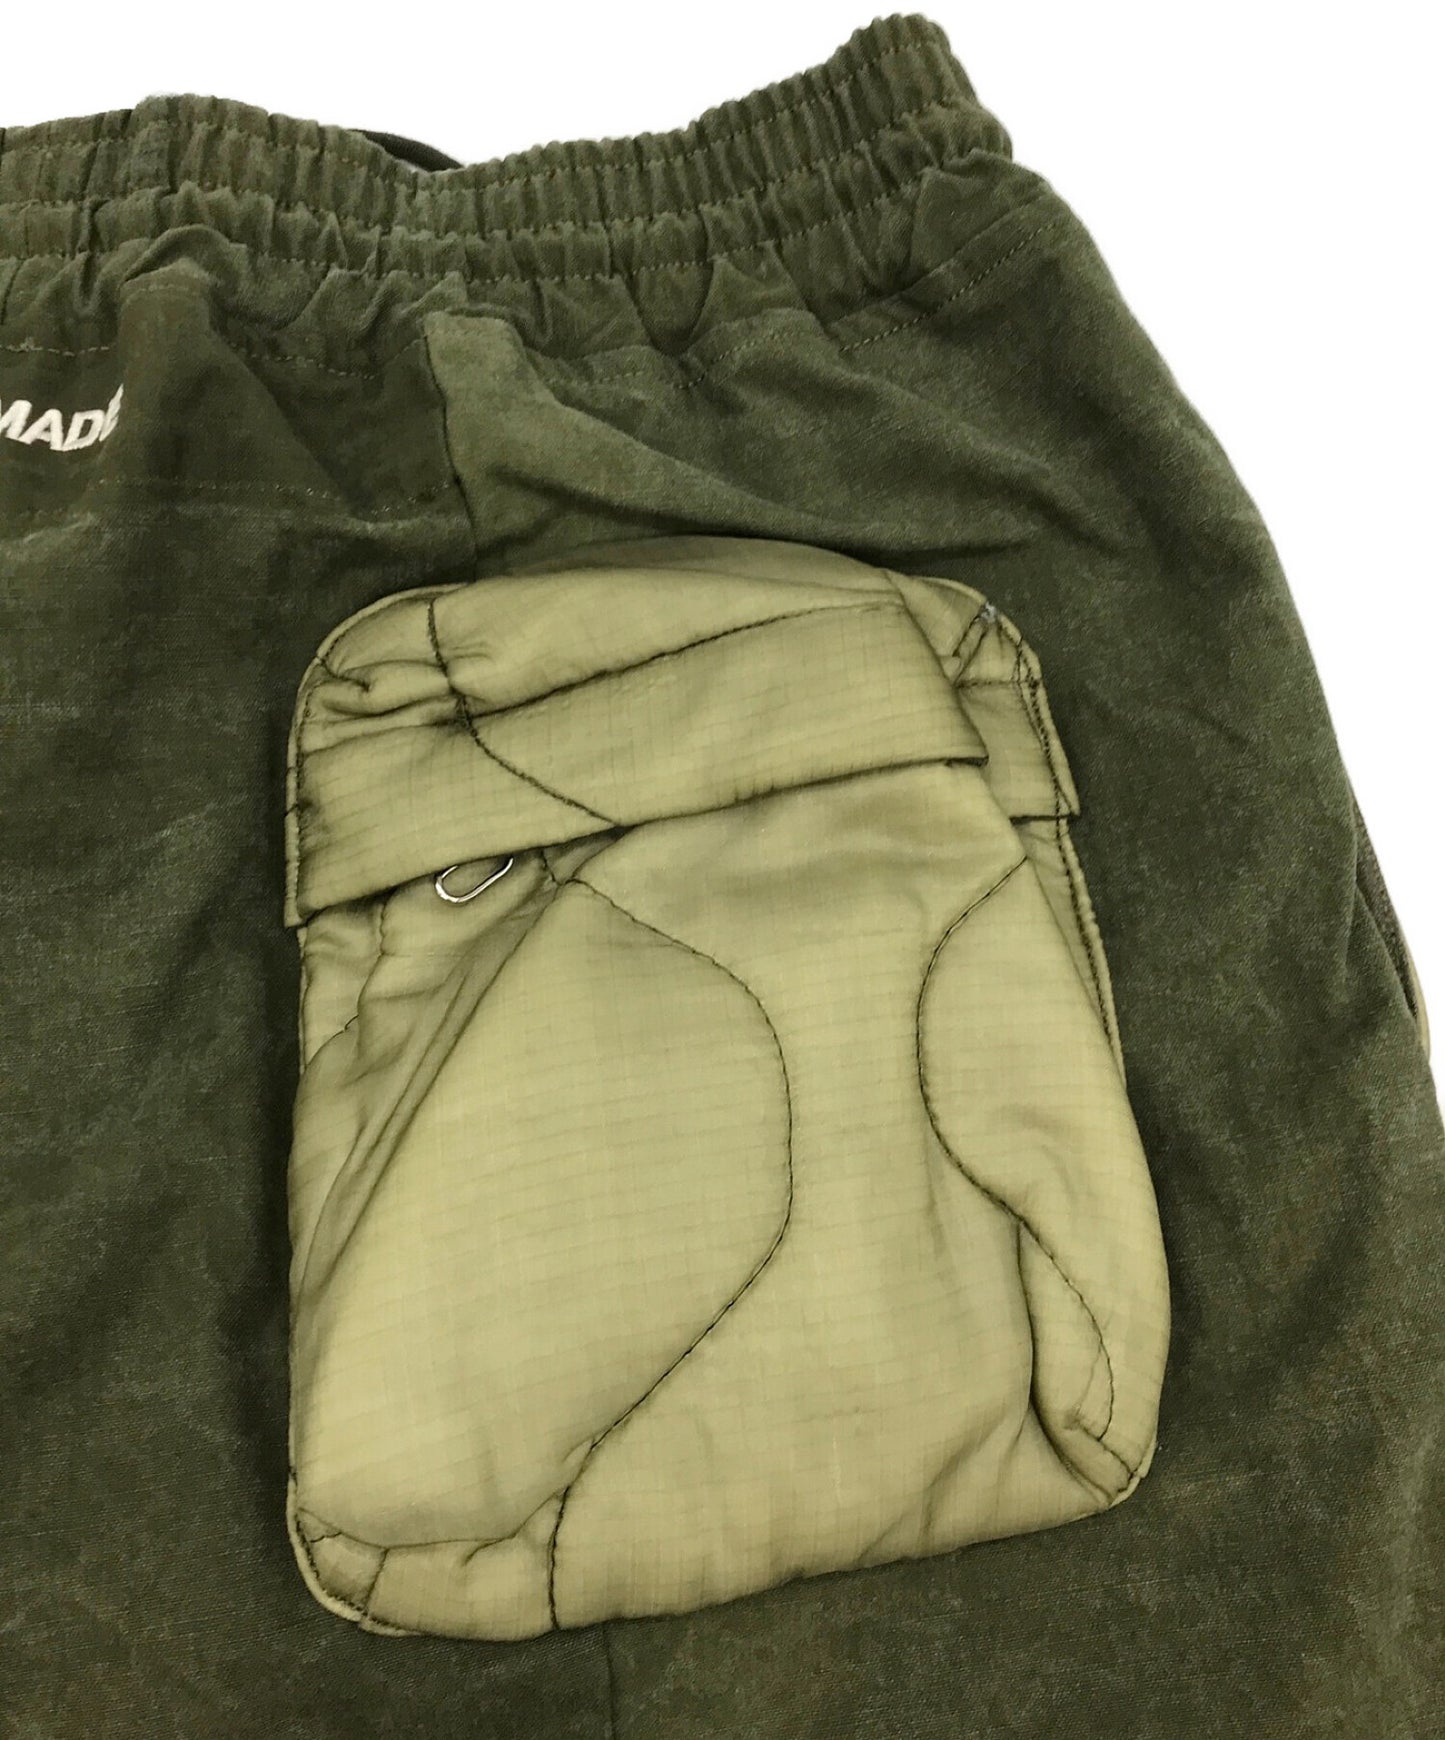 Readymade Liner กางเกงกางเกงขายาว re-co-kh-00-00-115